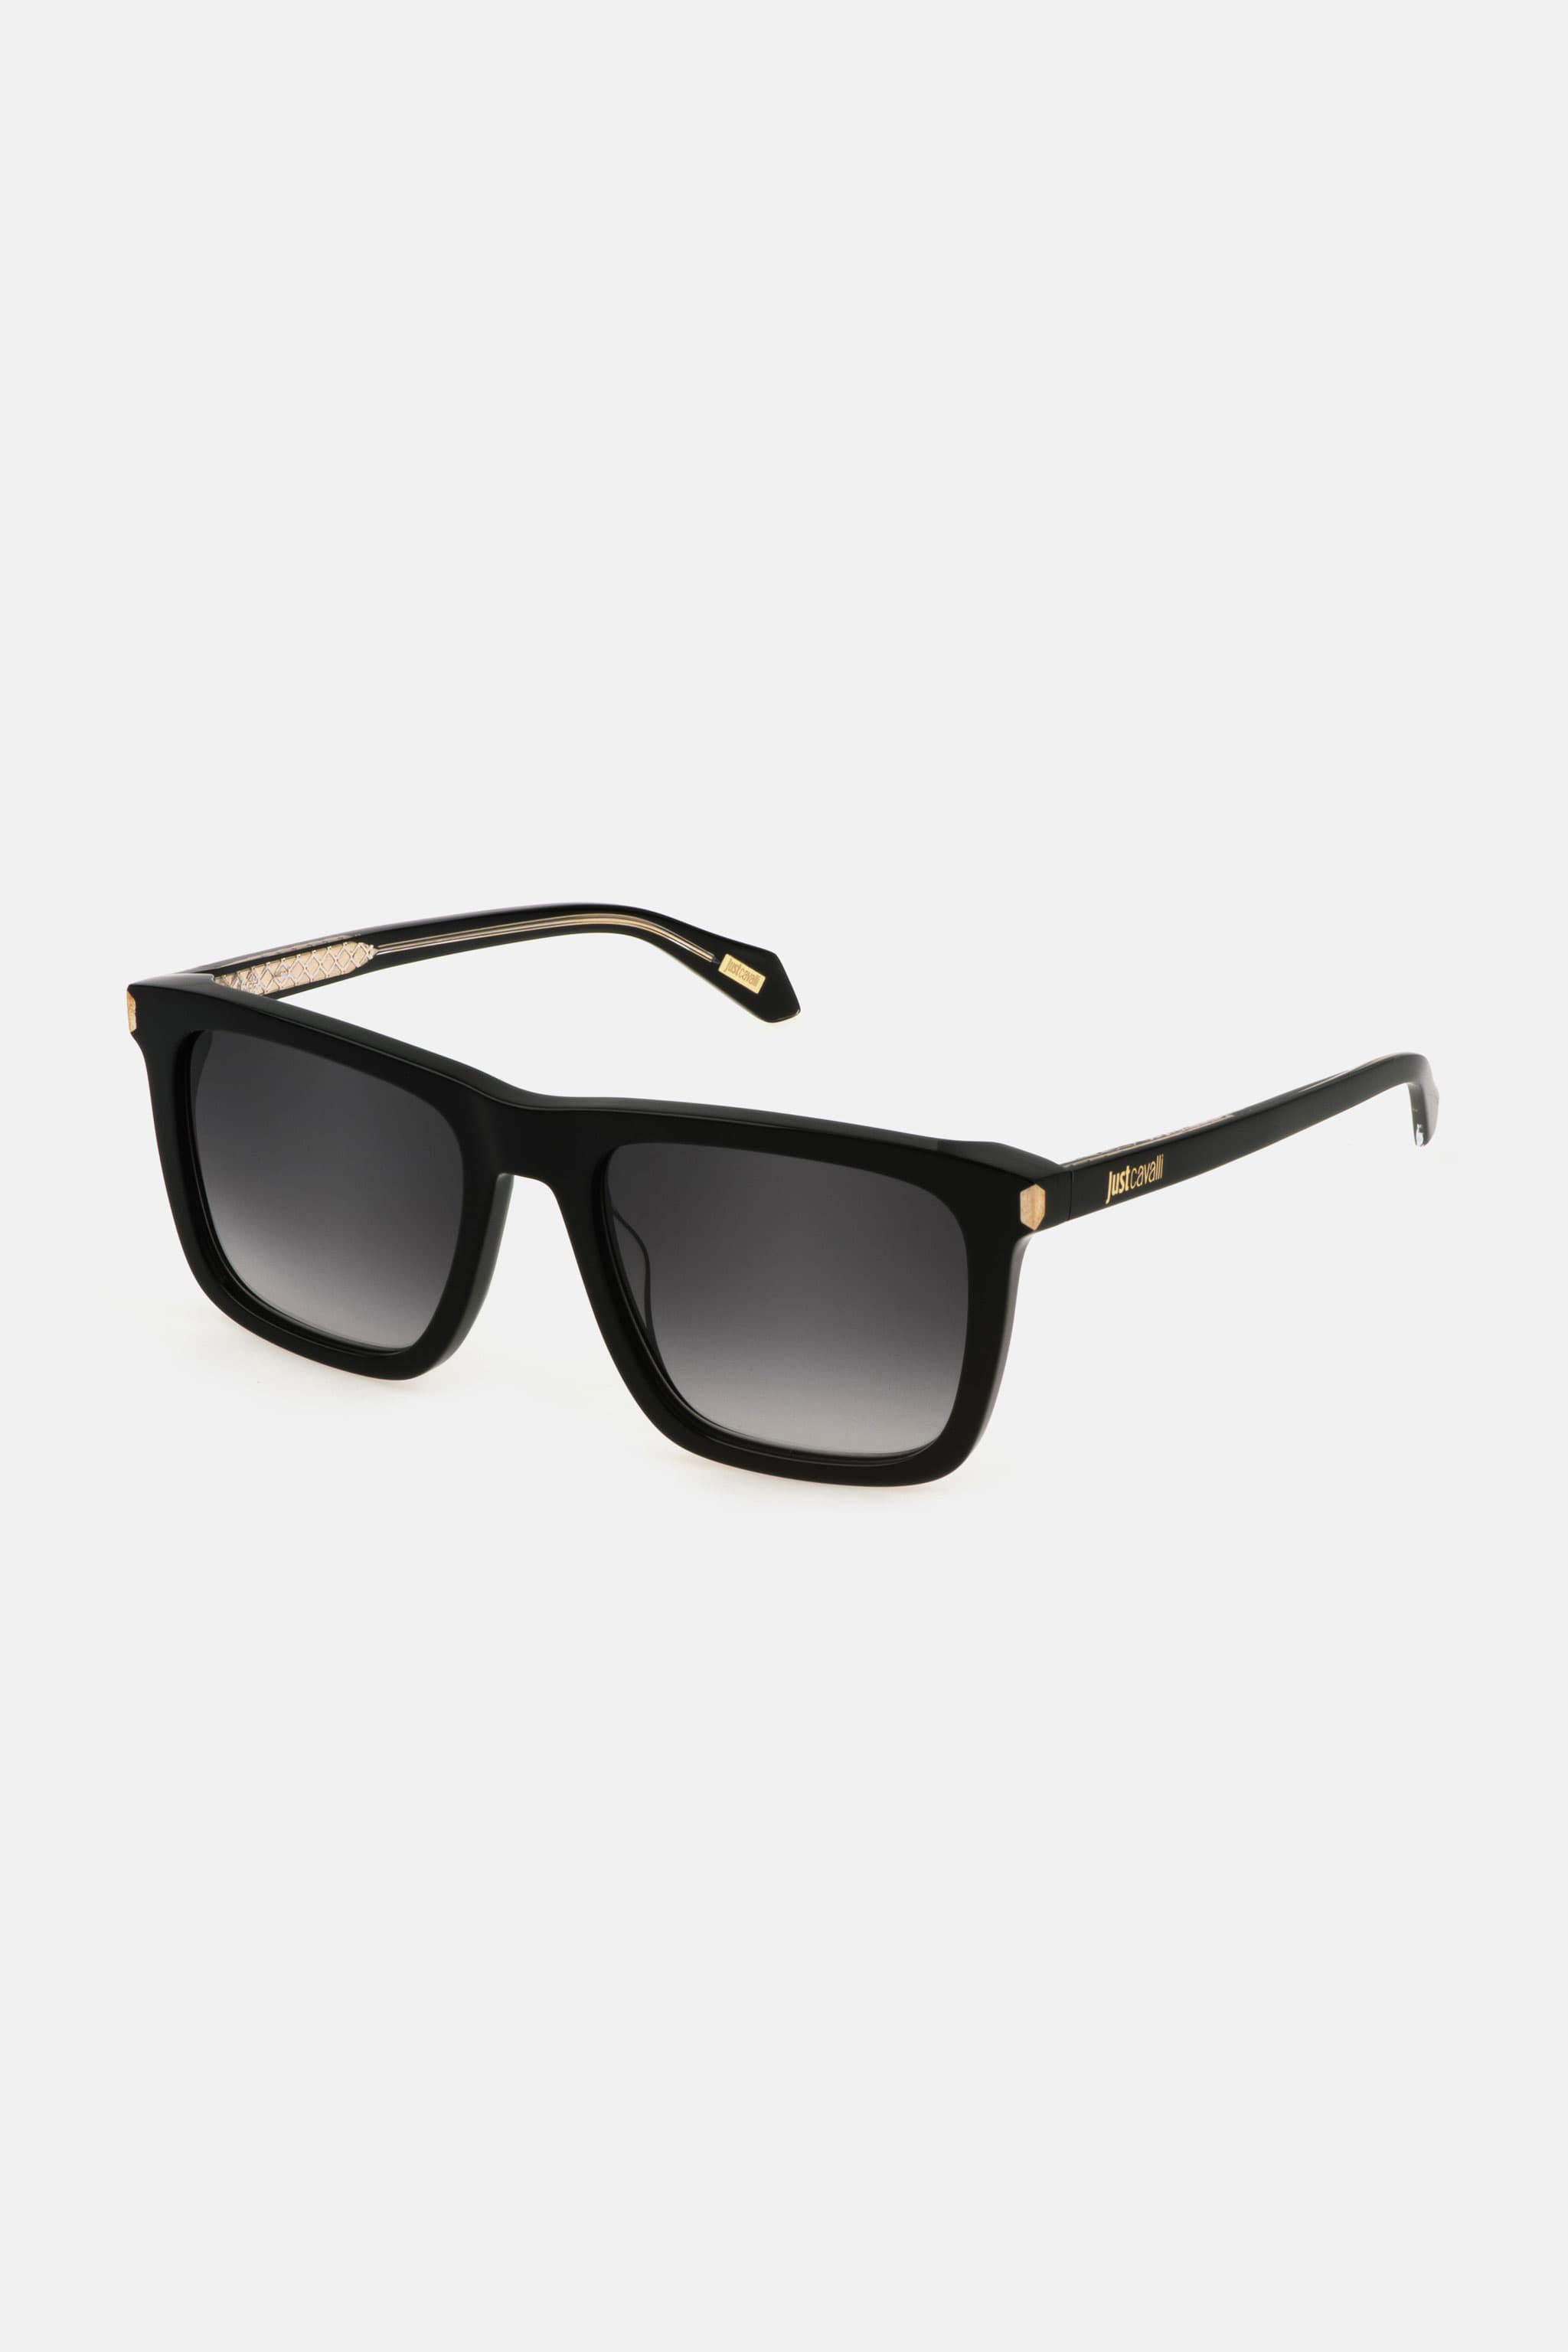 Sunglasses Just Cavalli | SHINY BLACK | Men | Just Cavalli US